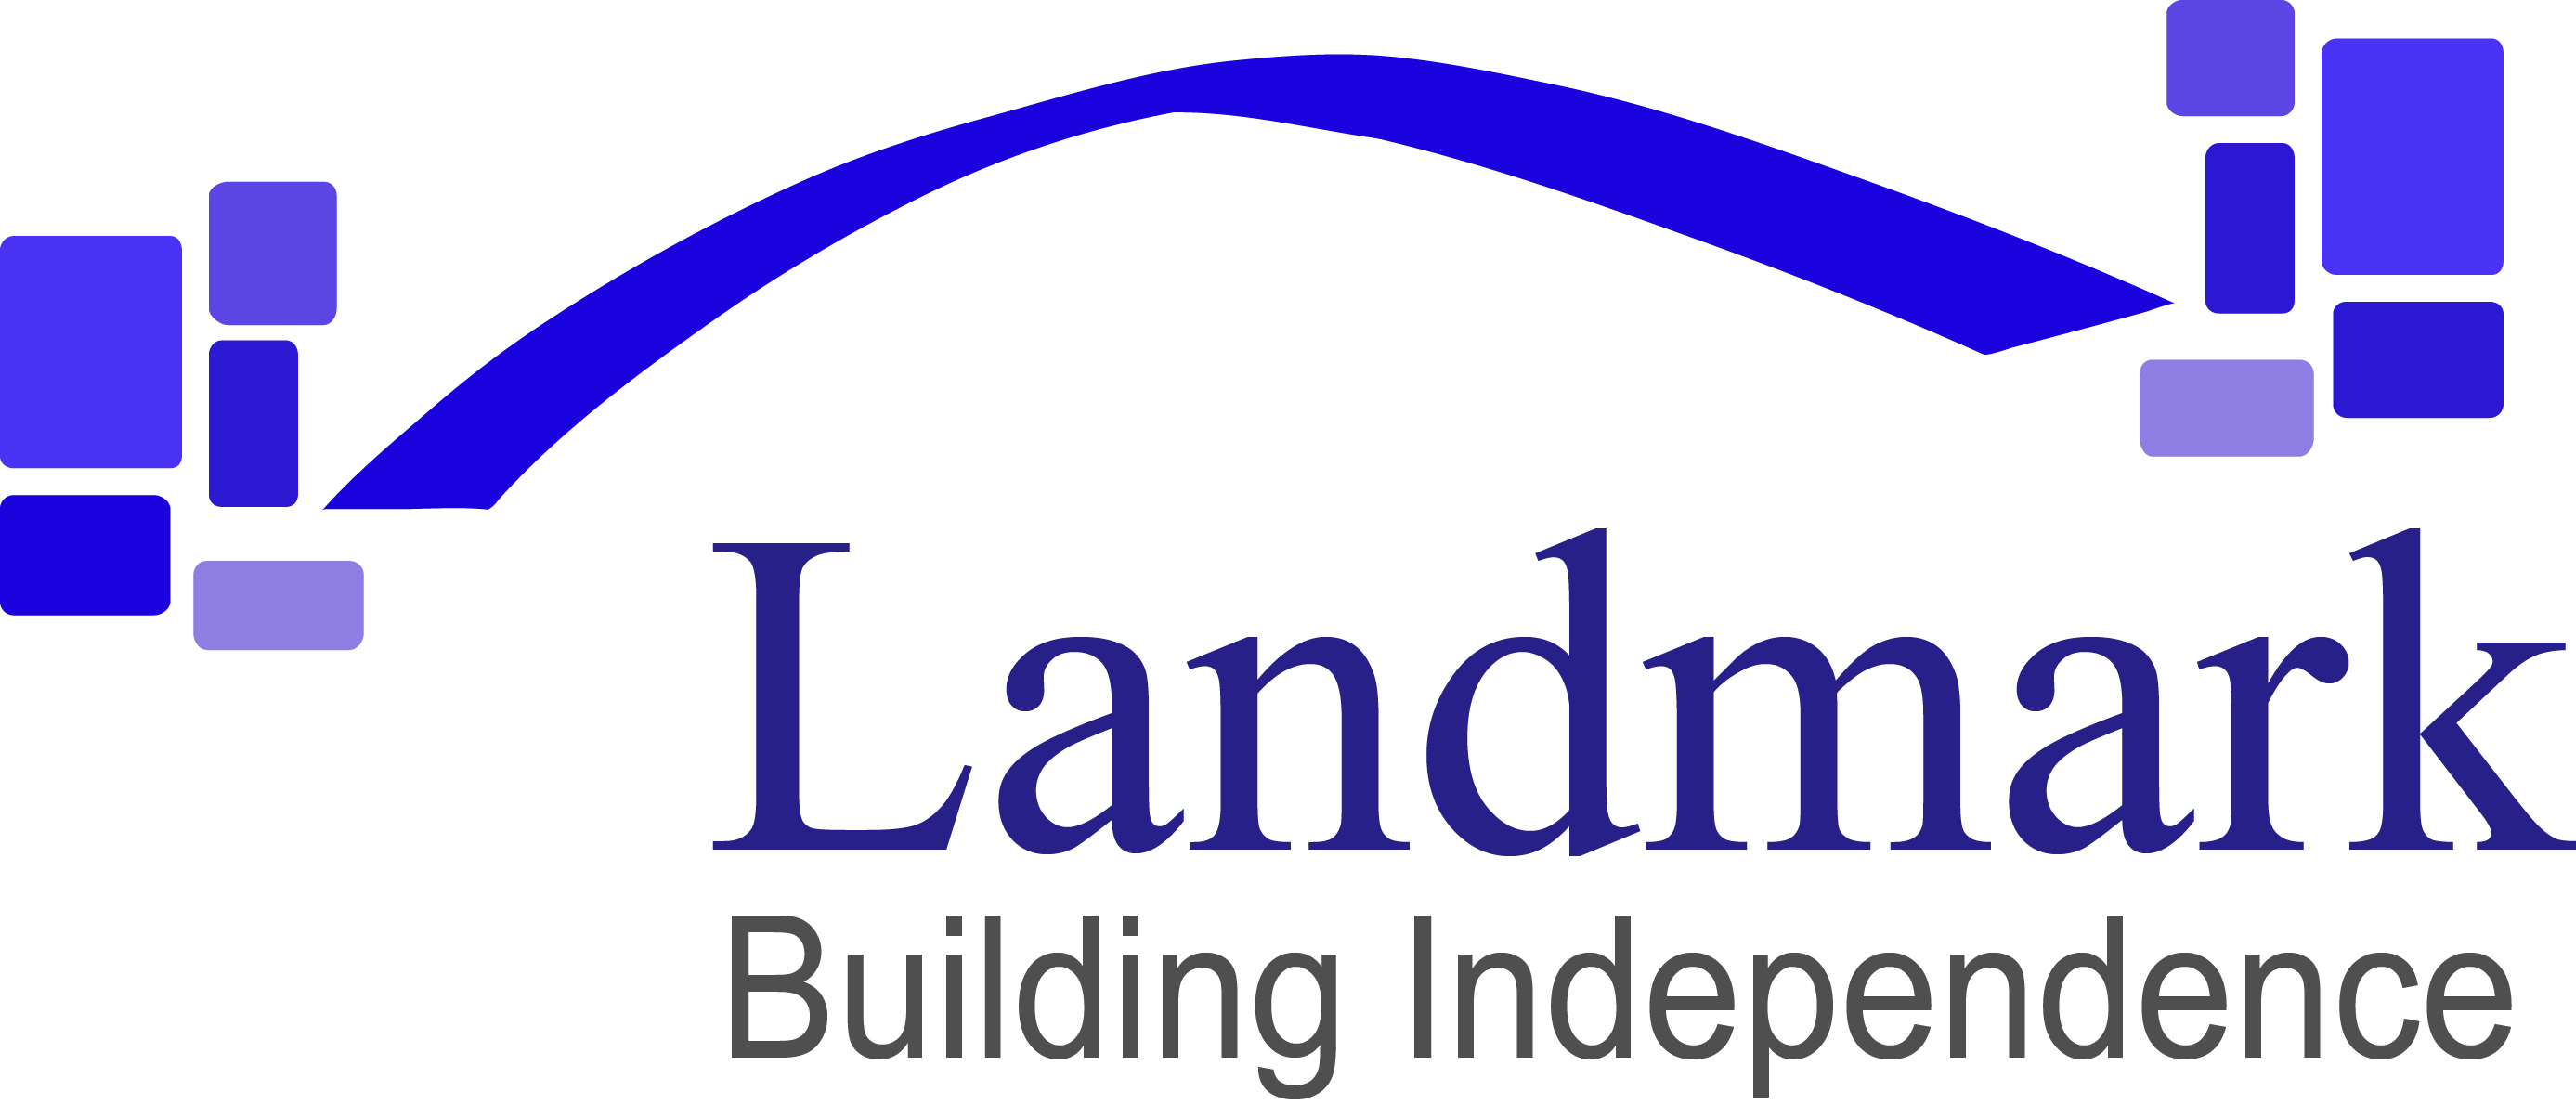 Landmark Home Health Care Services logo